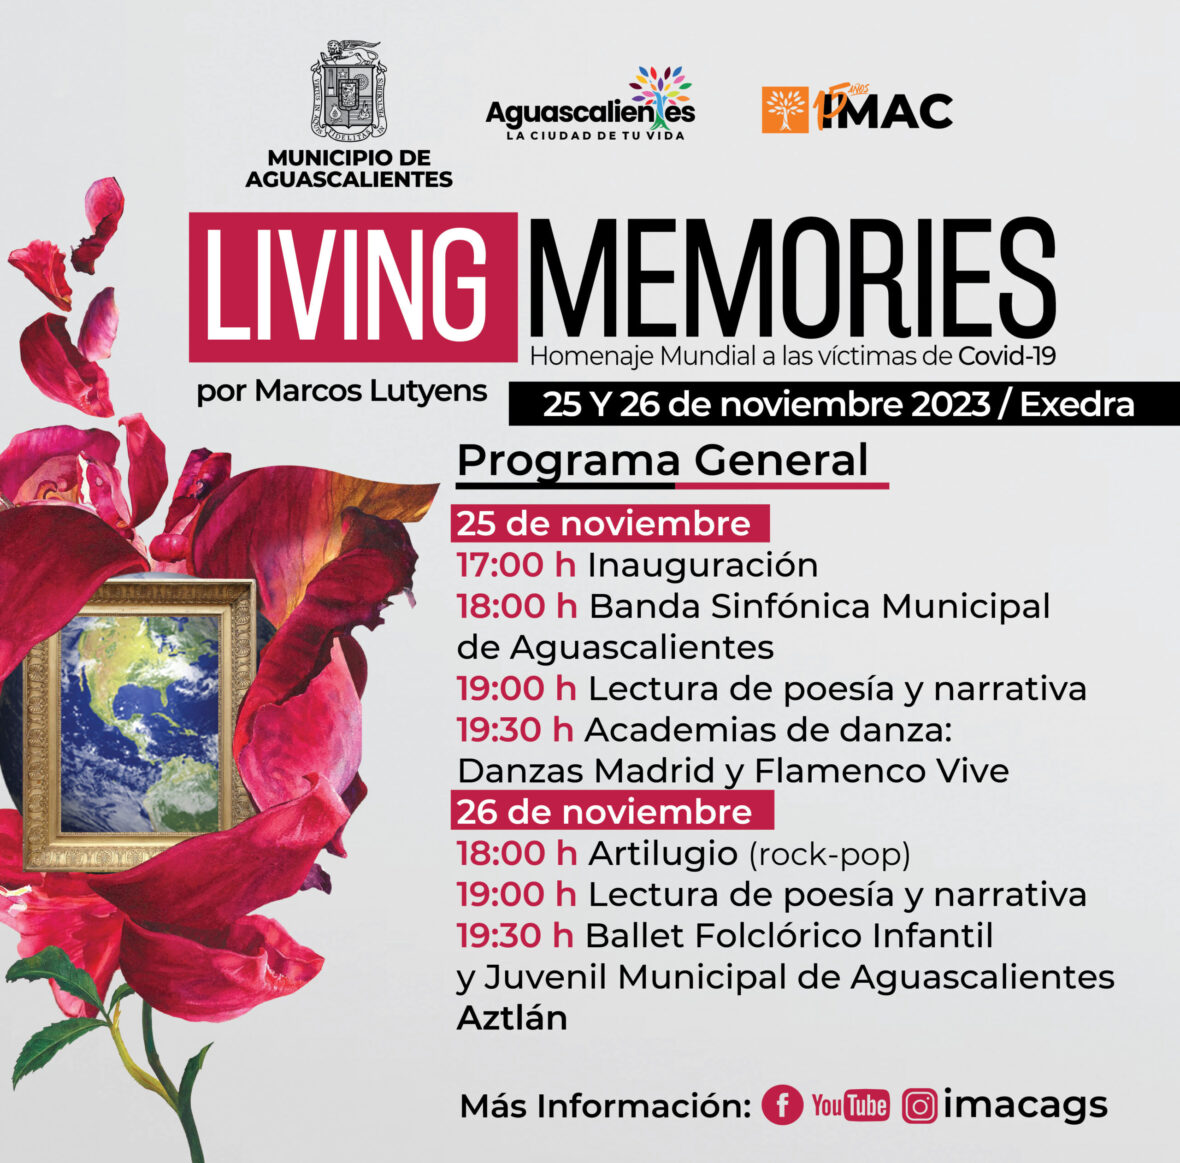 IMG 1311 scaled 1 scaled IMAC RENDIRÁ TRIBUTO DE NIVEL MUNDIAL A VÍCTIMAS DEL COVID-19, A TRAVÉS DE MONUMENTO “LIVING MEMORIES”